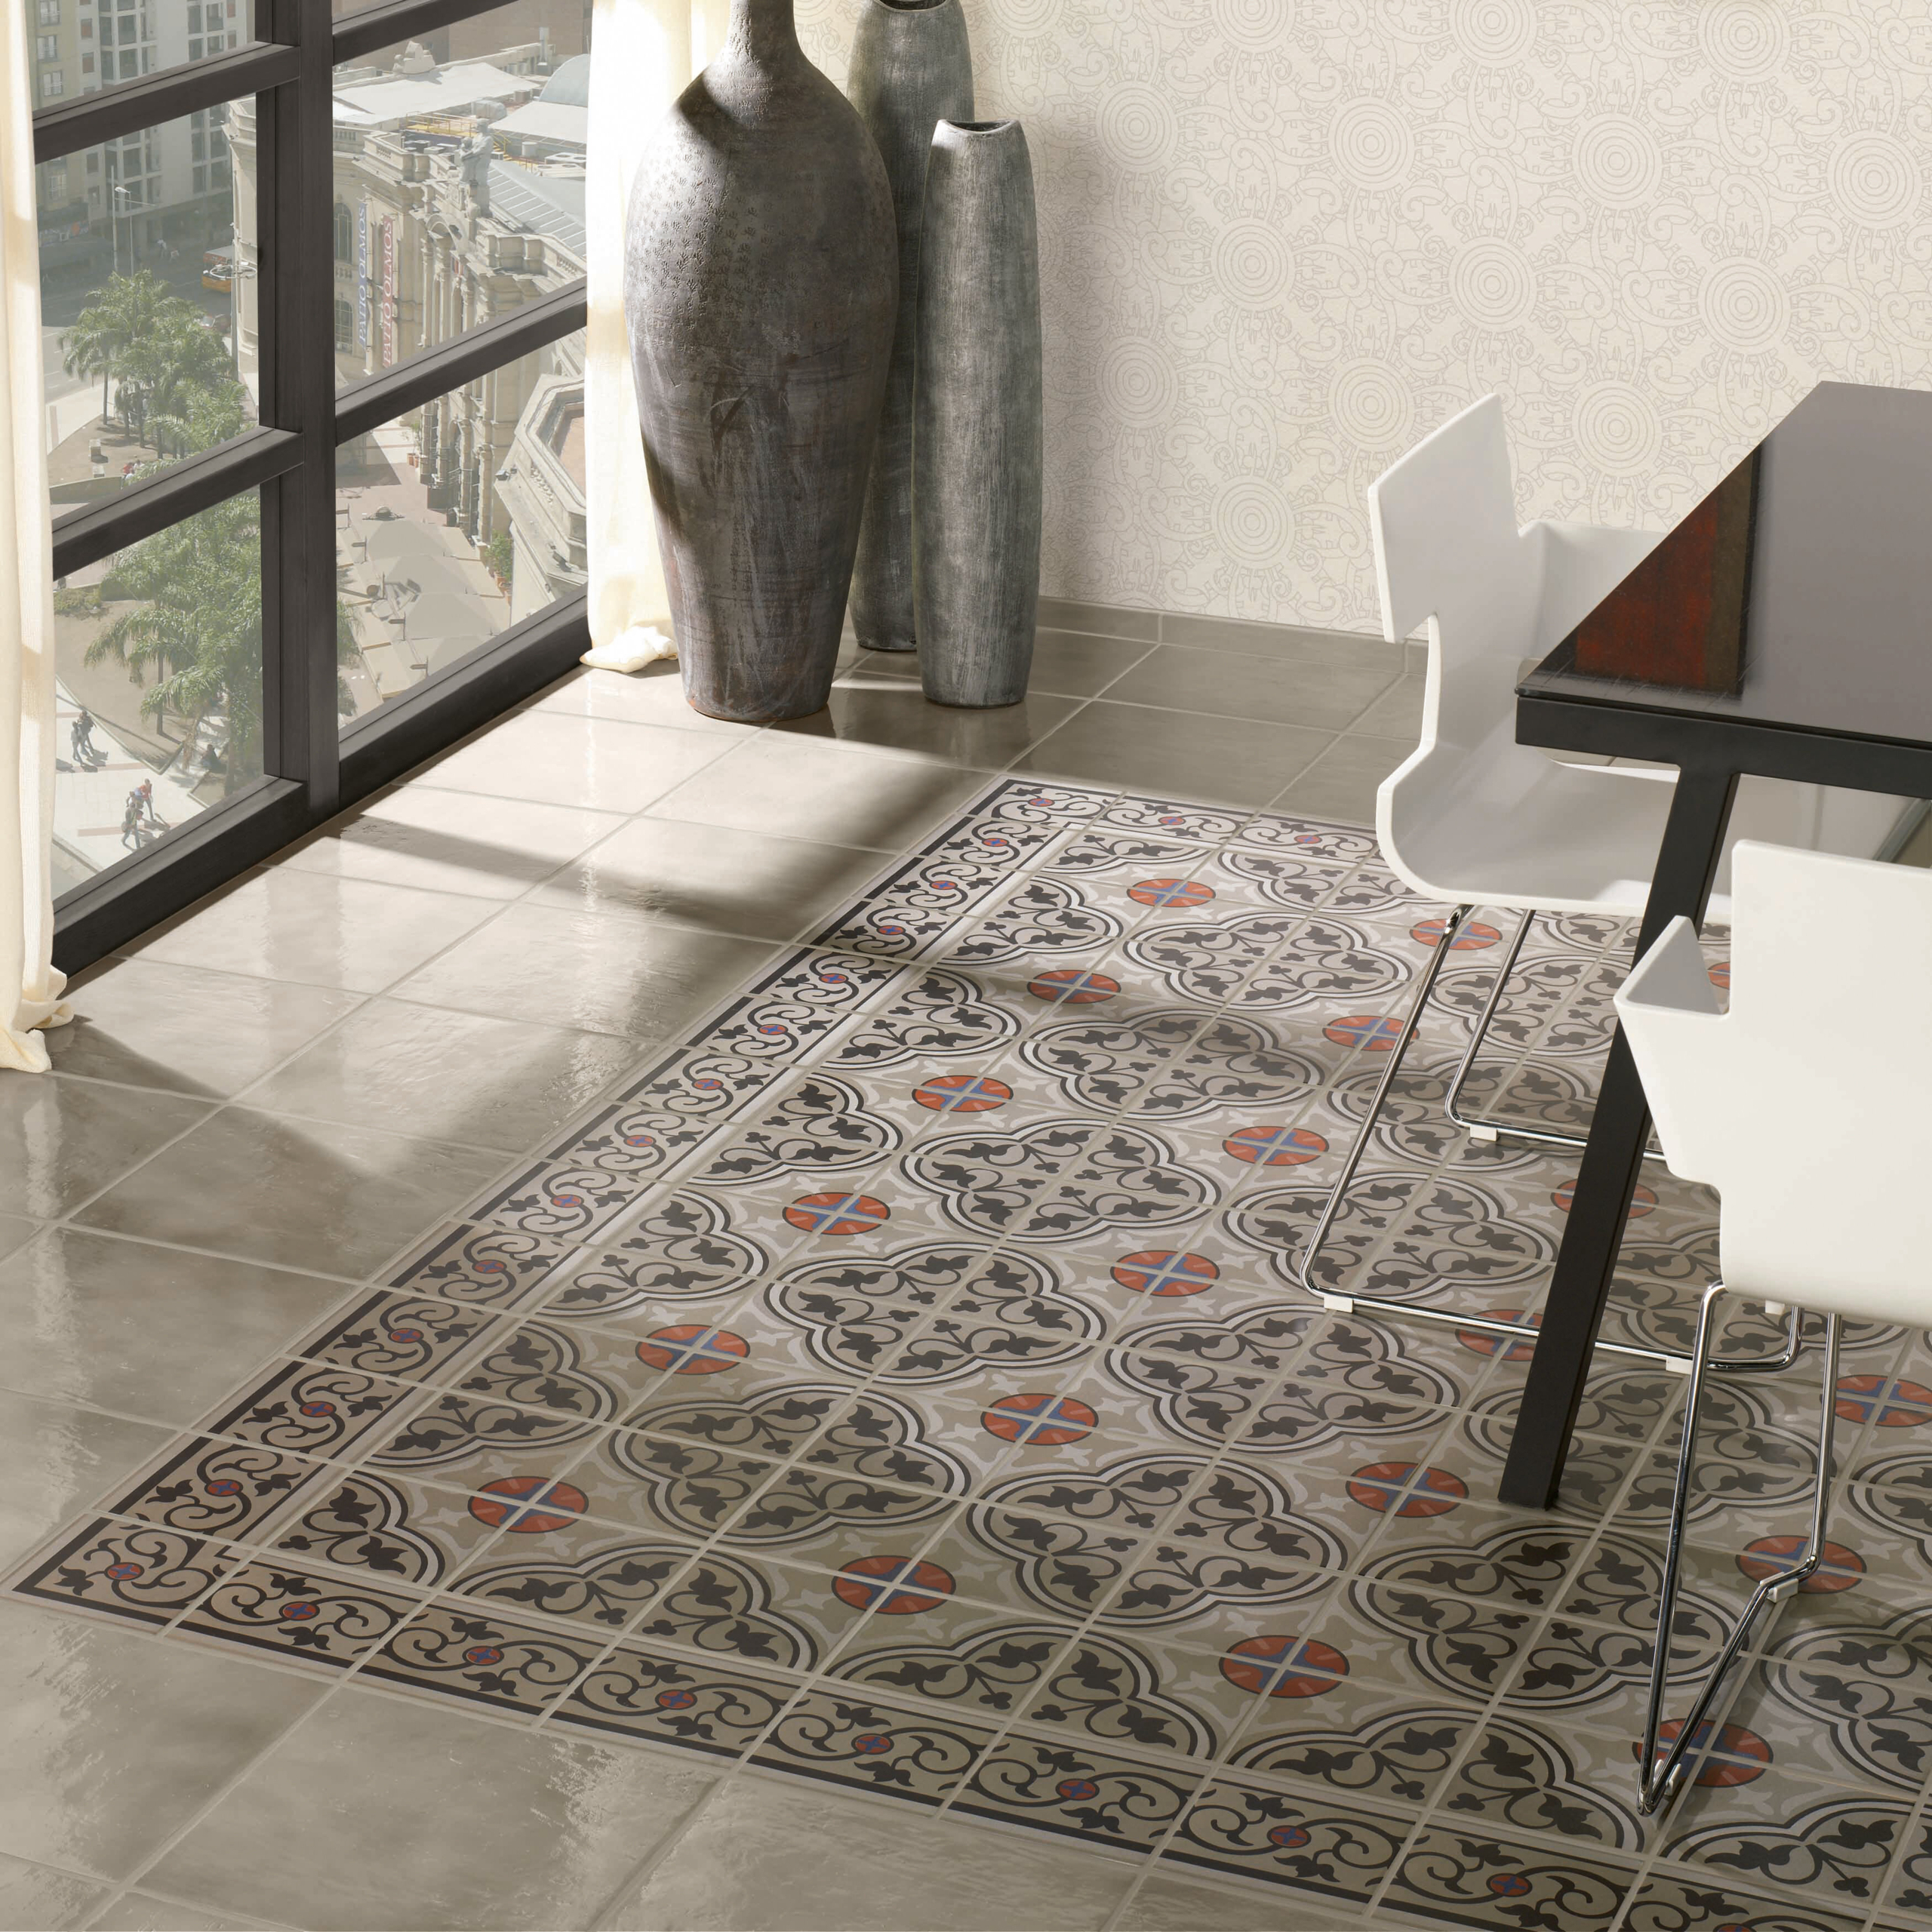 Decorative Floor Tile Inserts Visualhunt, Grey Decorative Floor Tiles